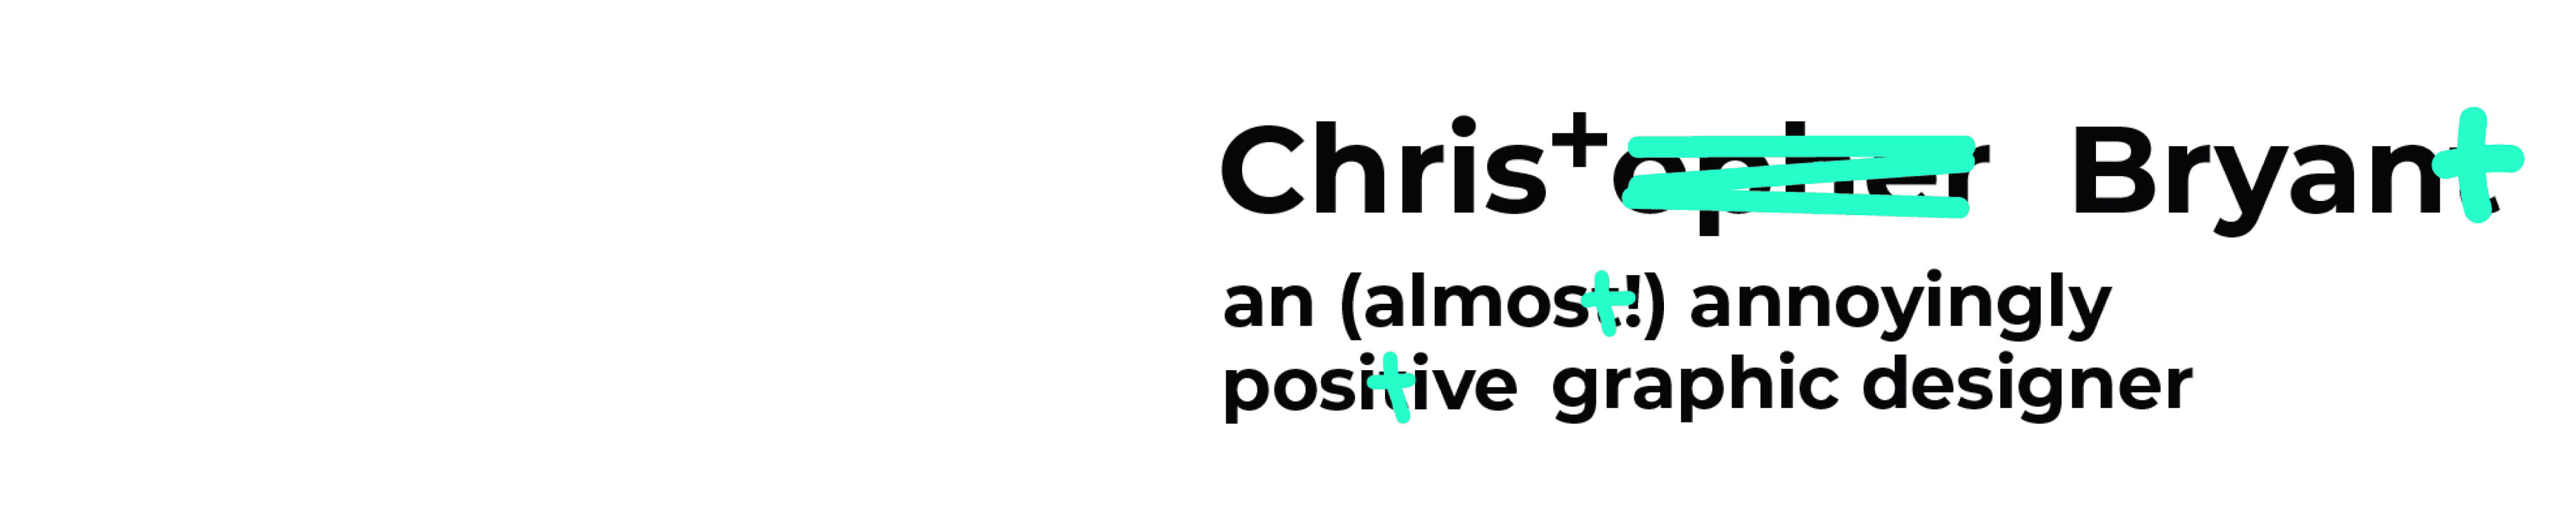 CHRIS BRYANT's profile banner